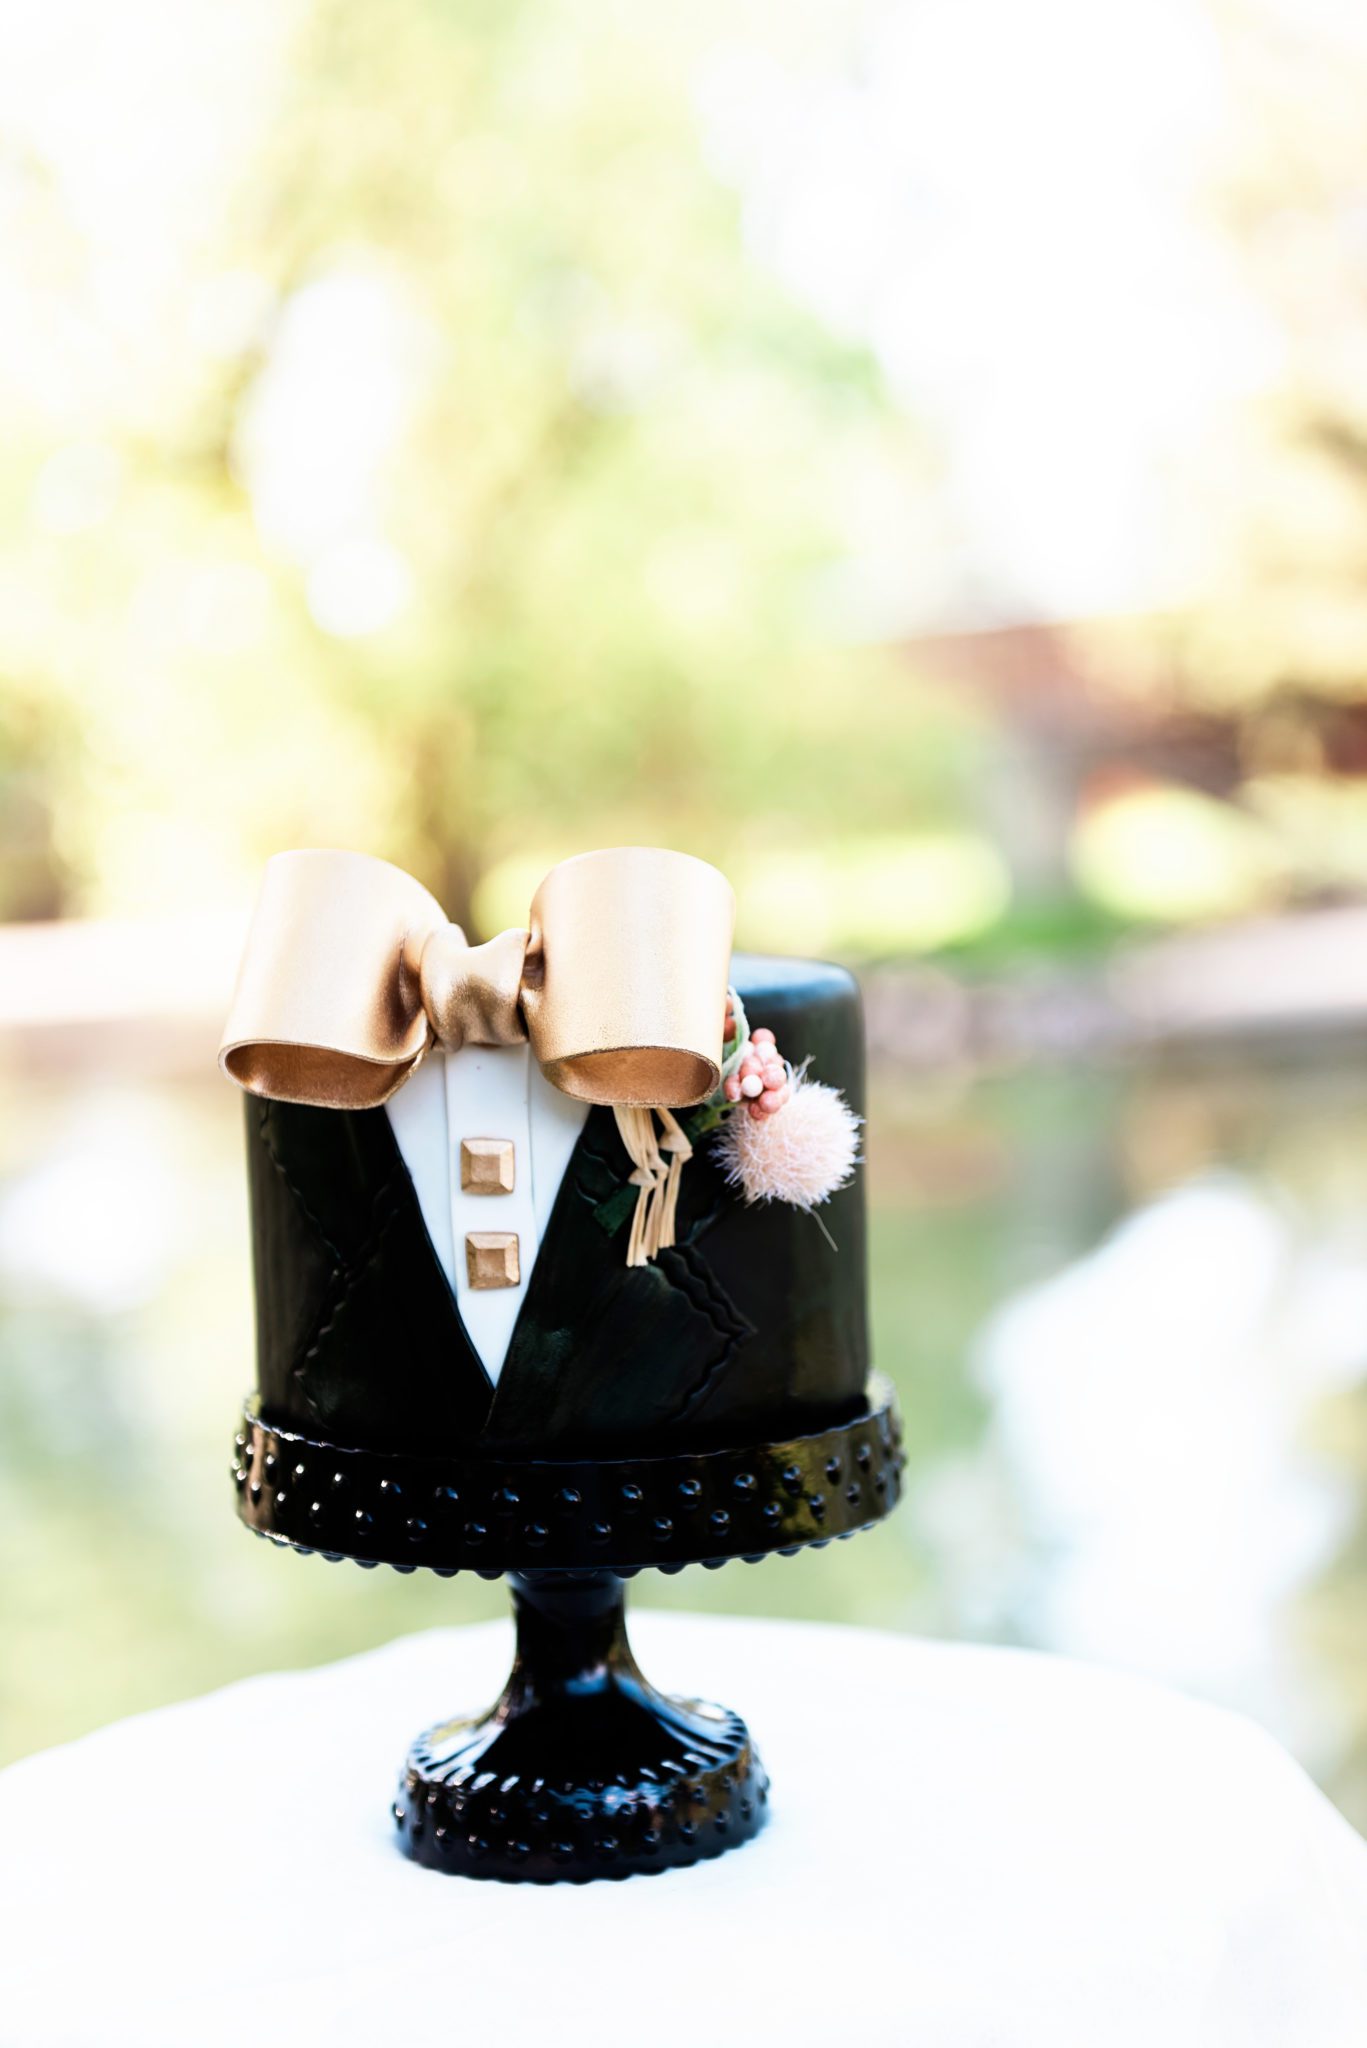 Cute tuxedo themed wedding cake for the groom